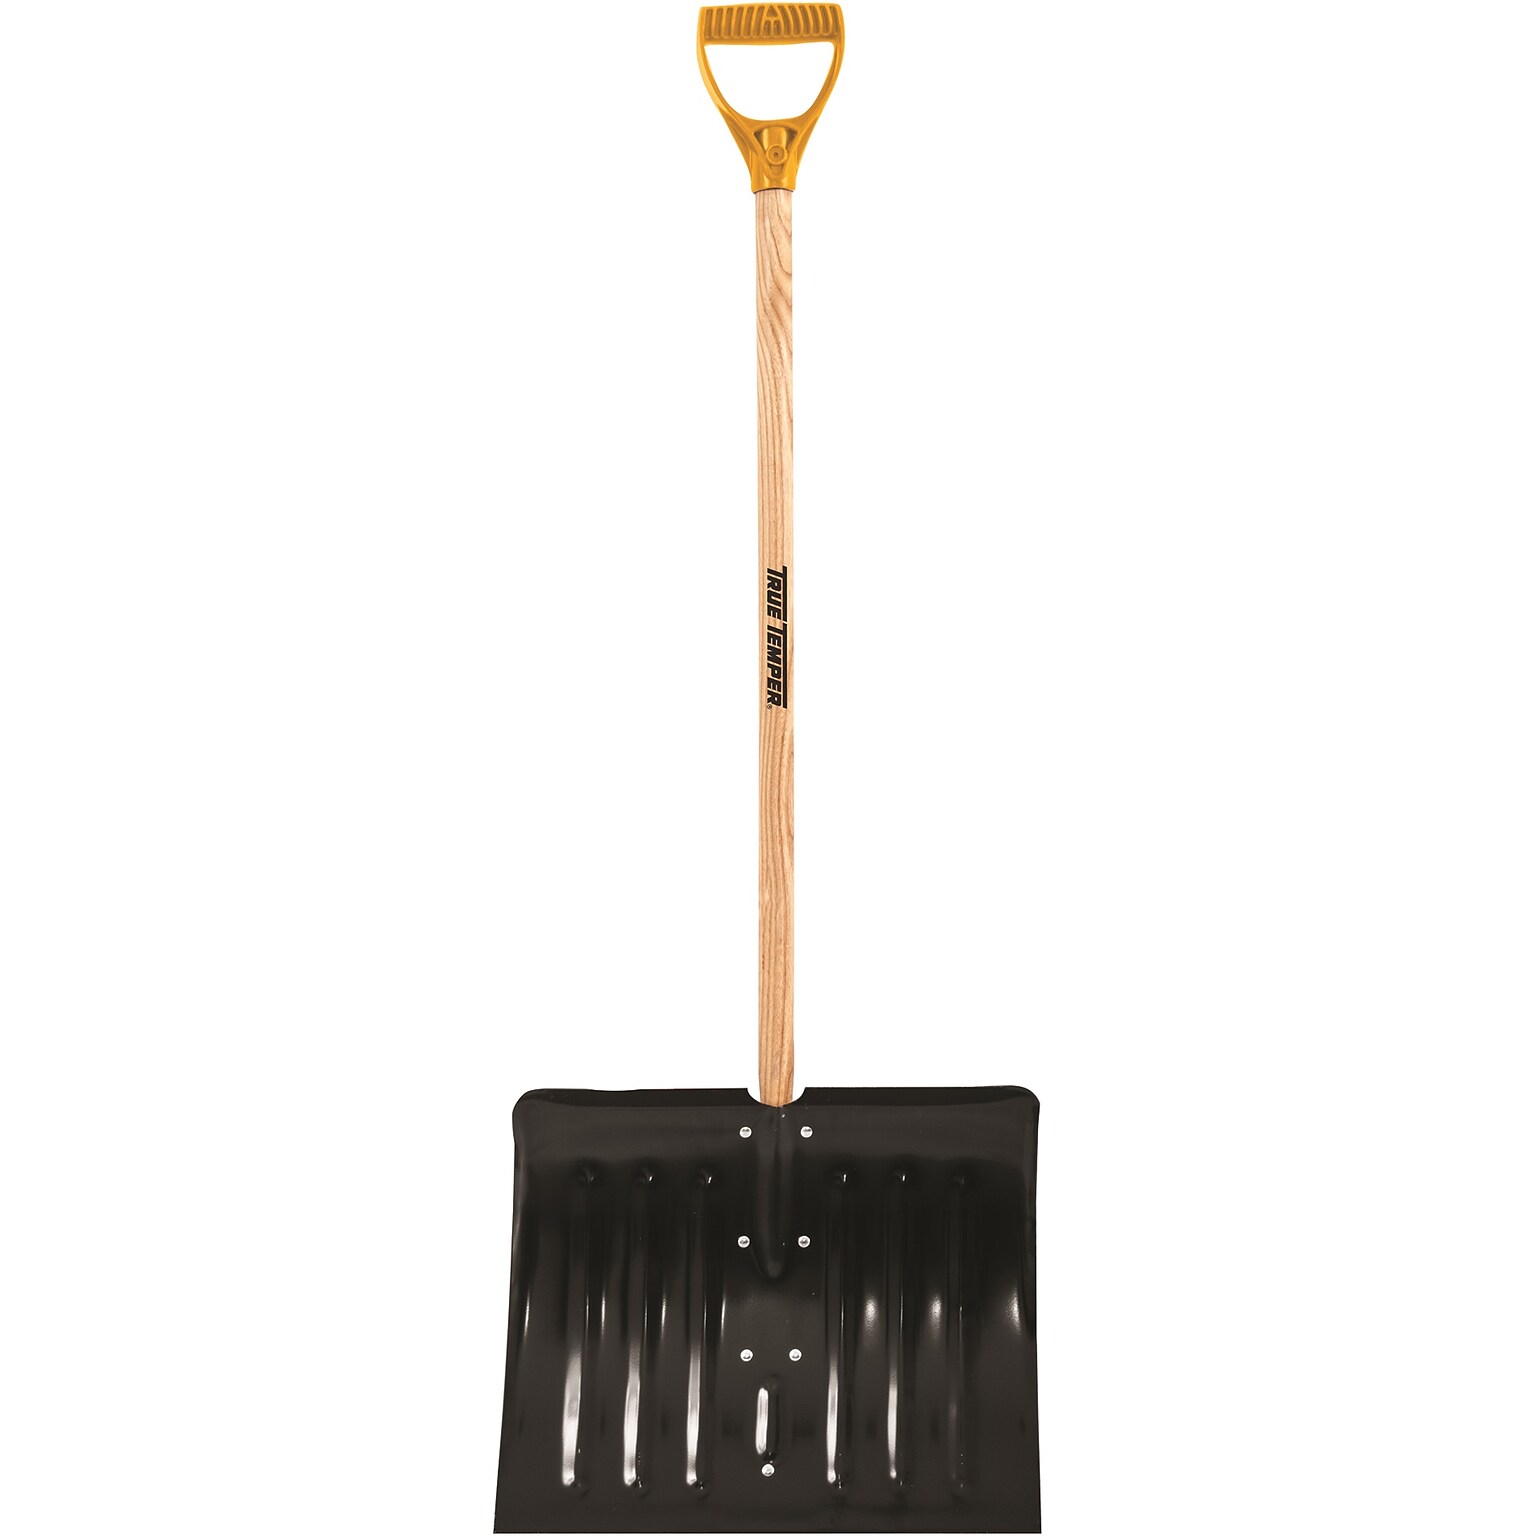 Jackson Professional Tools True Temper 18W Snow Shovel with Wood Handle (027-1640700)